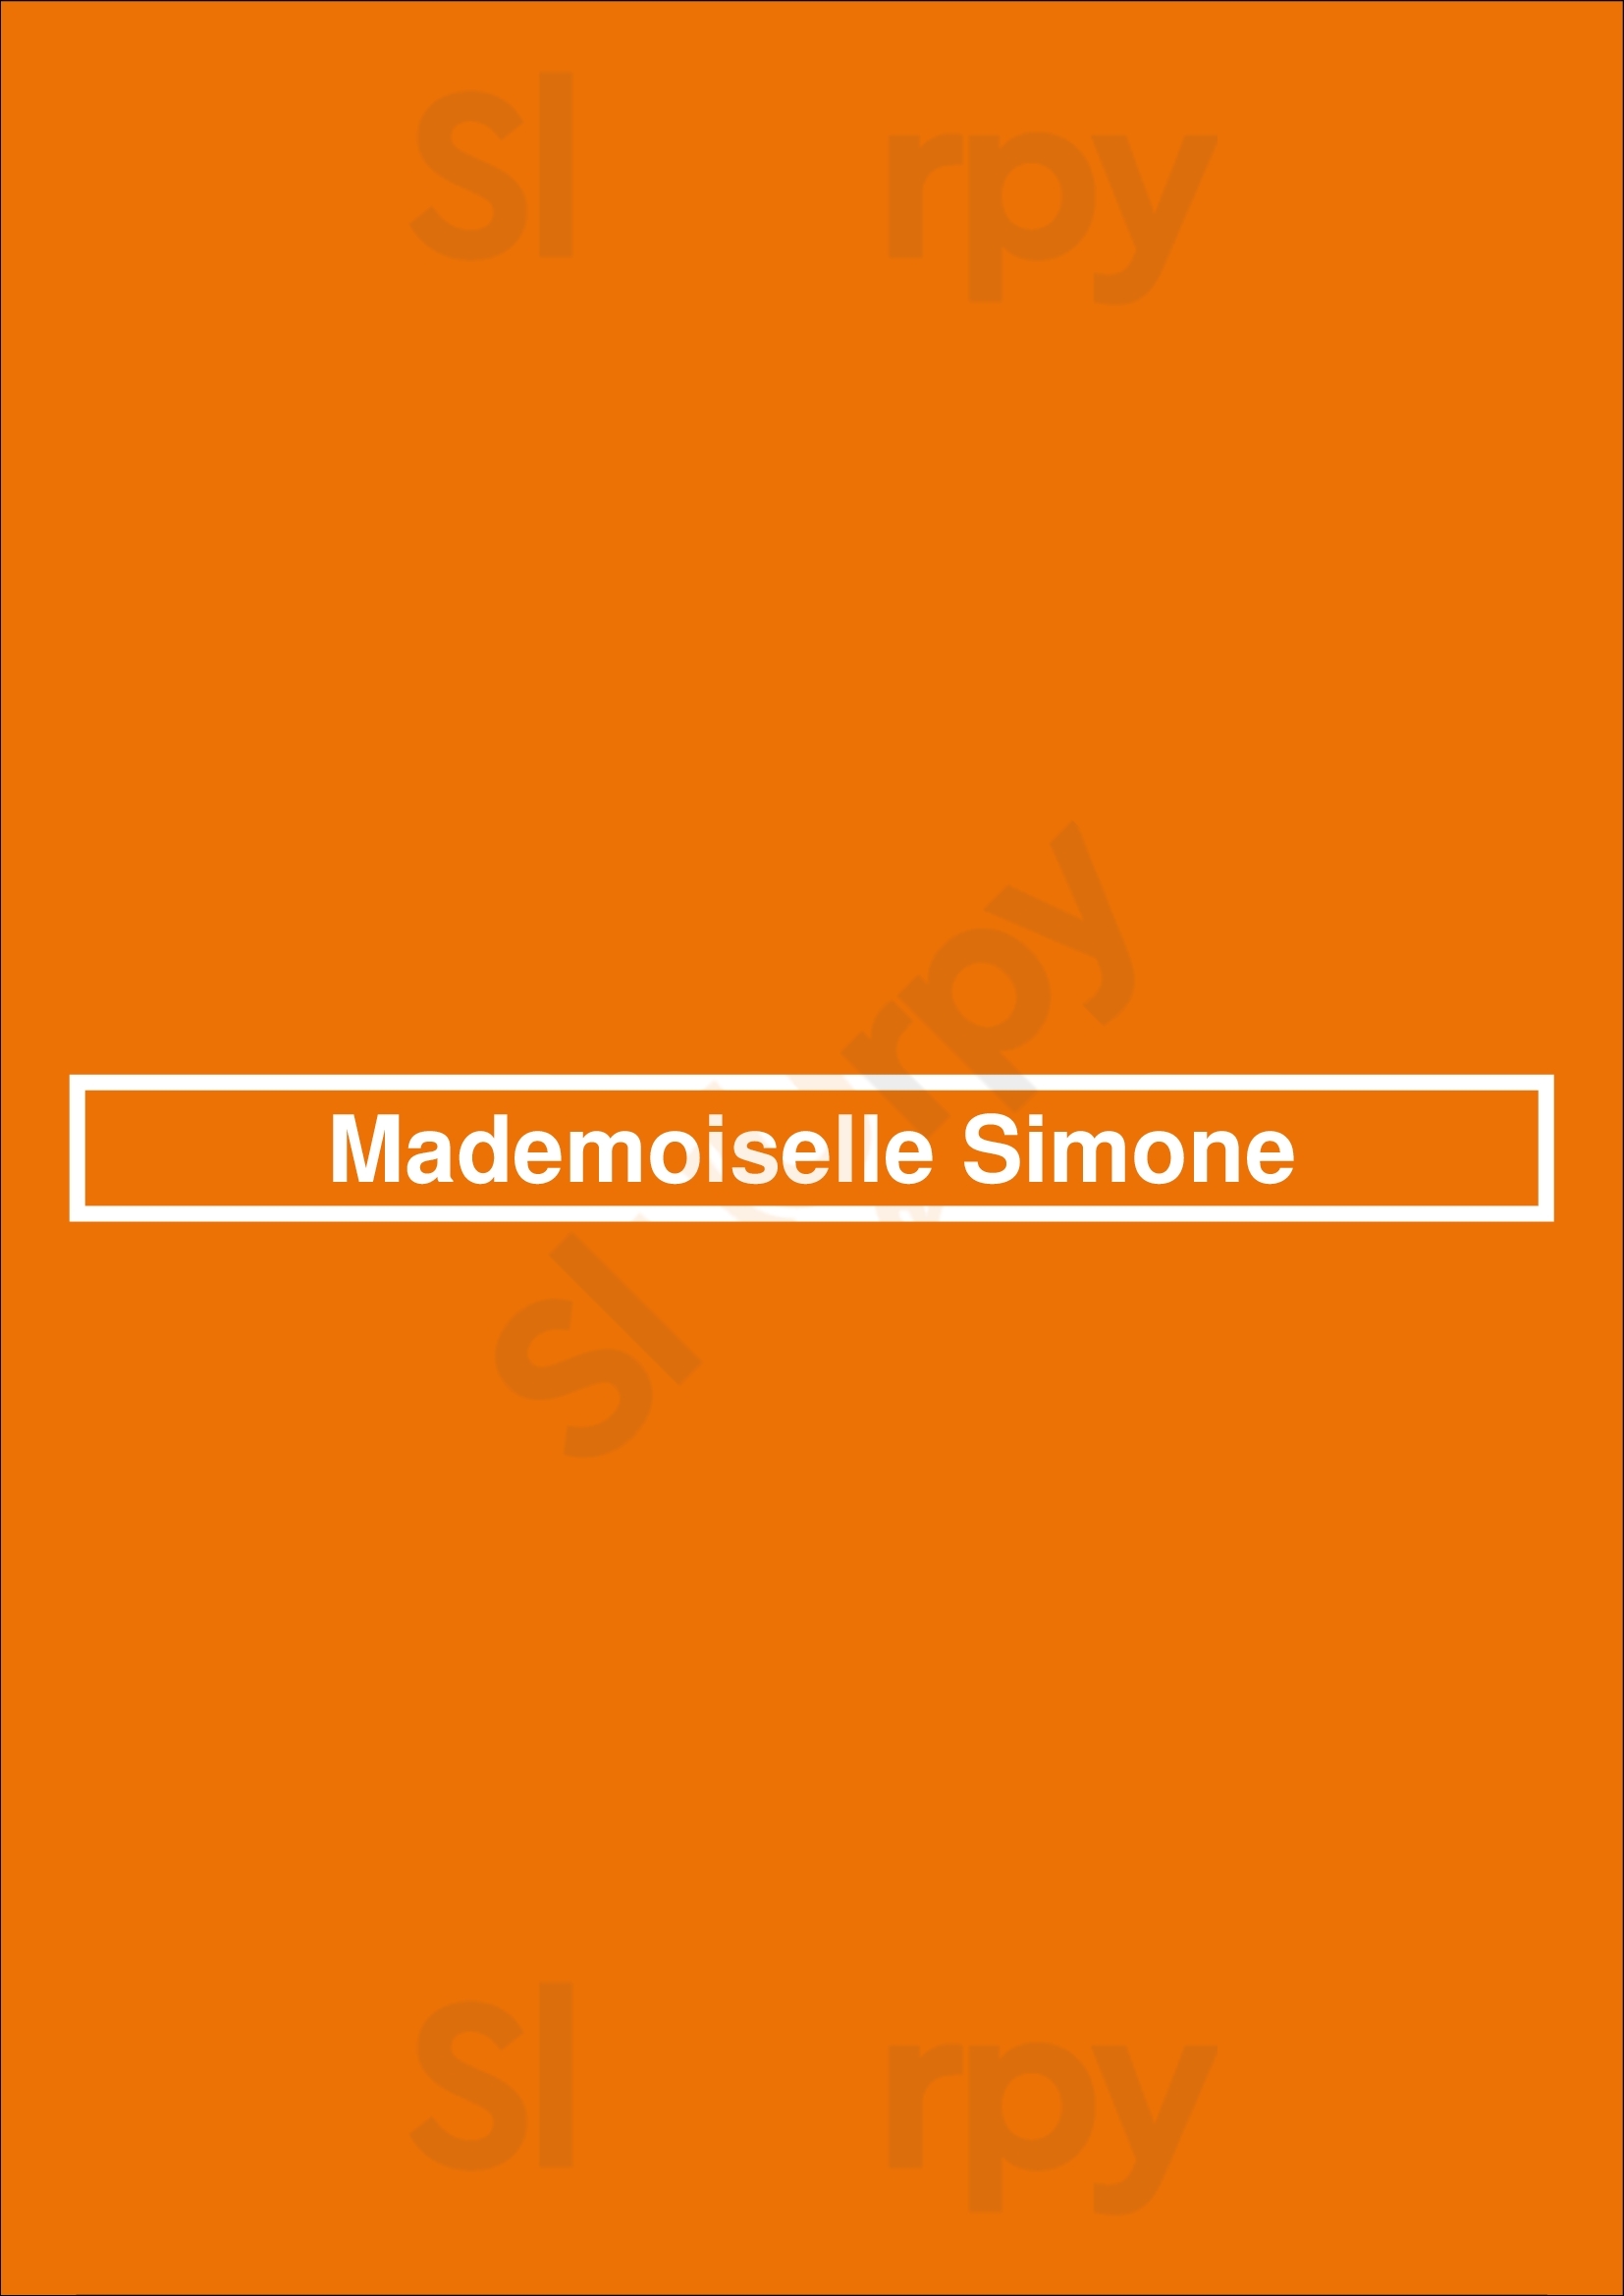 Mademoiselle Simone Lyon Menu - 1